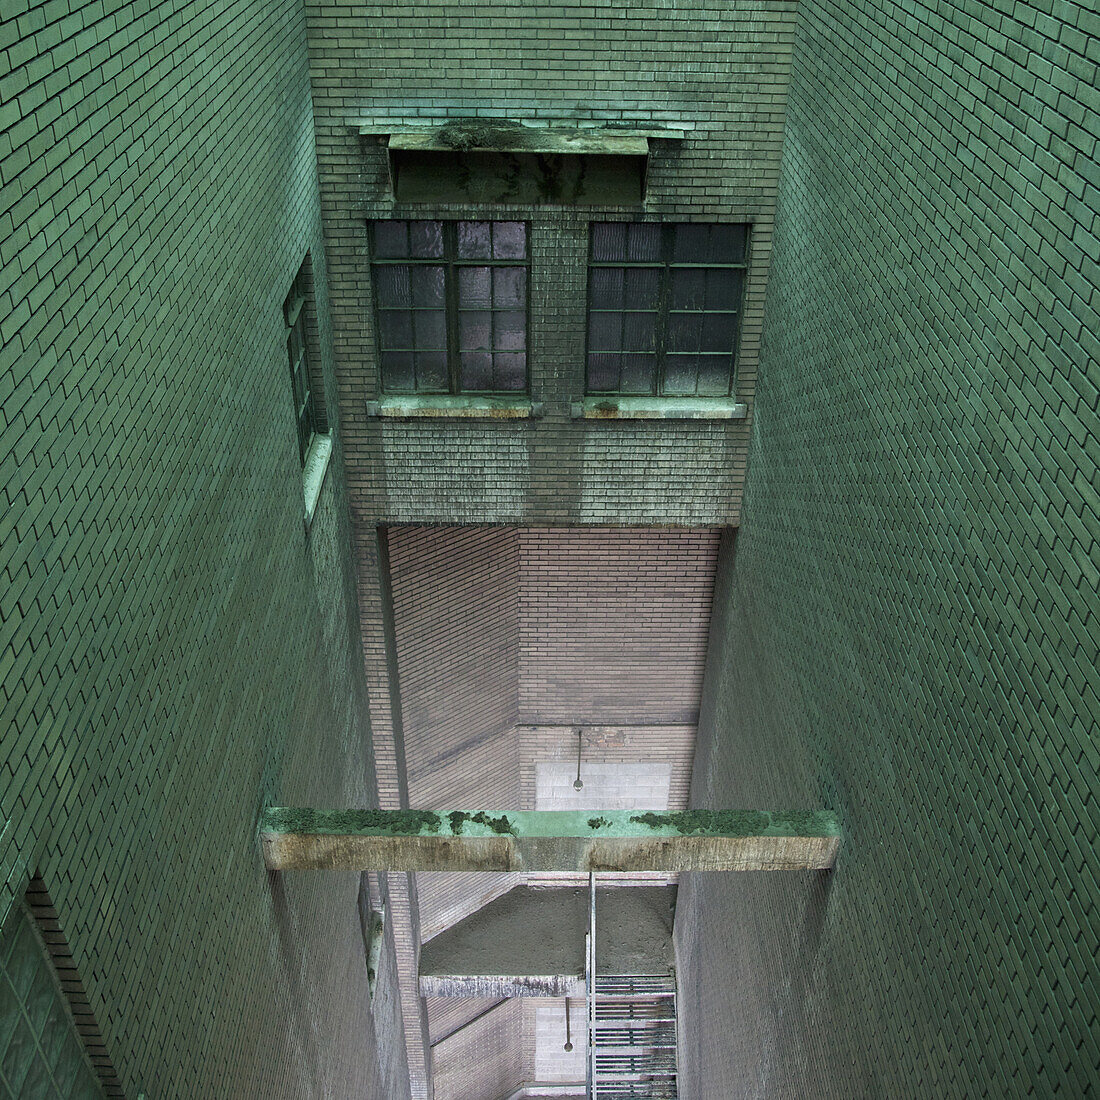 Green hued brick walls